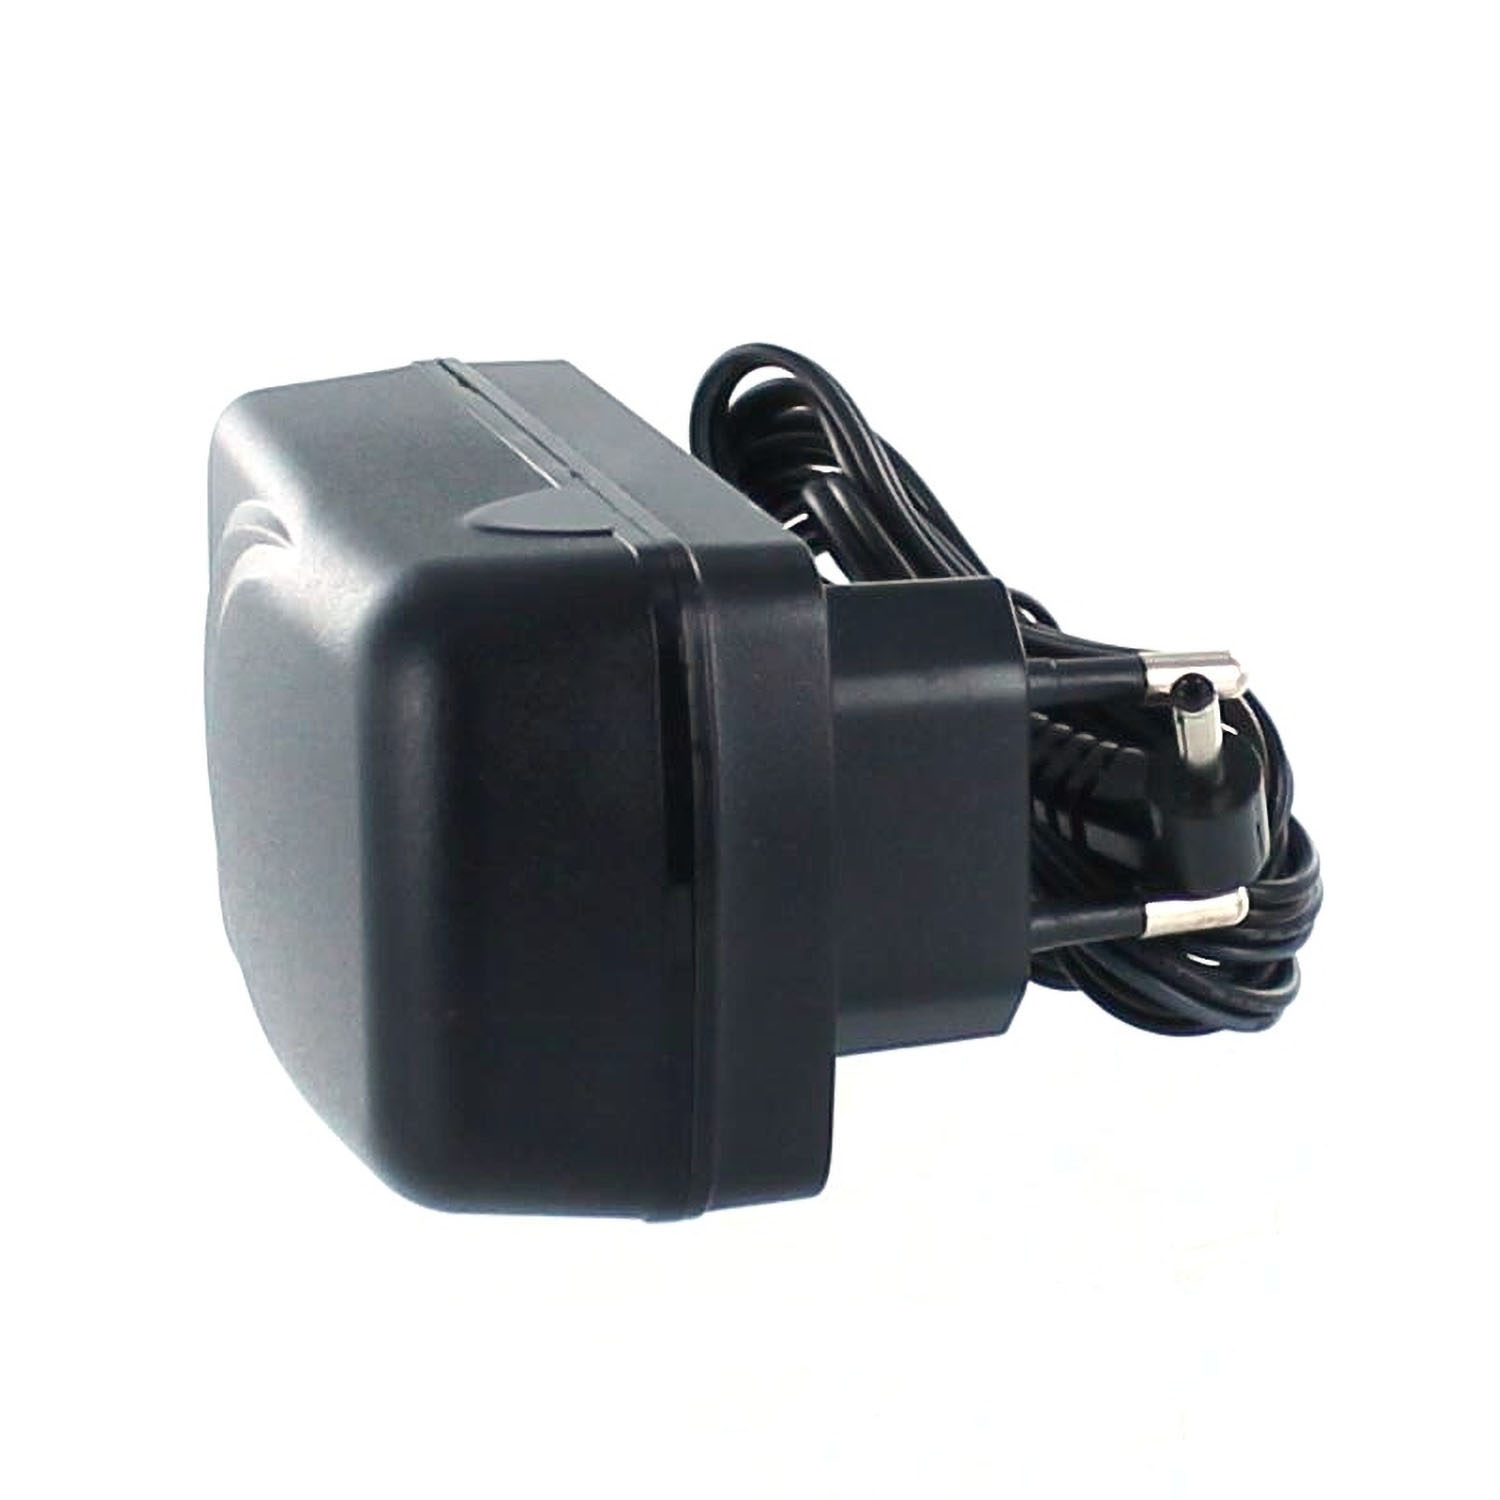 MV700 schwarz mit Volt, MOBILOTEC 8.4 Canon, Netzteil/Ladegerät Netzteil kompatibel Canon